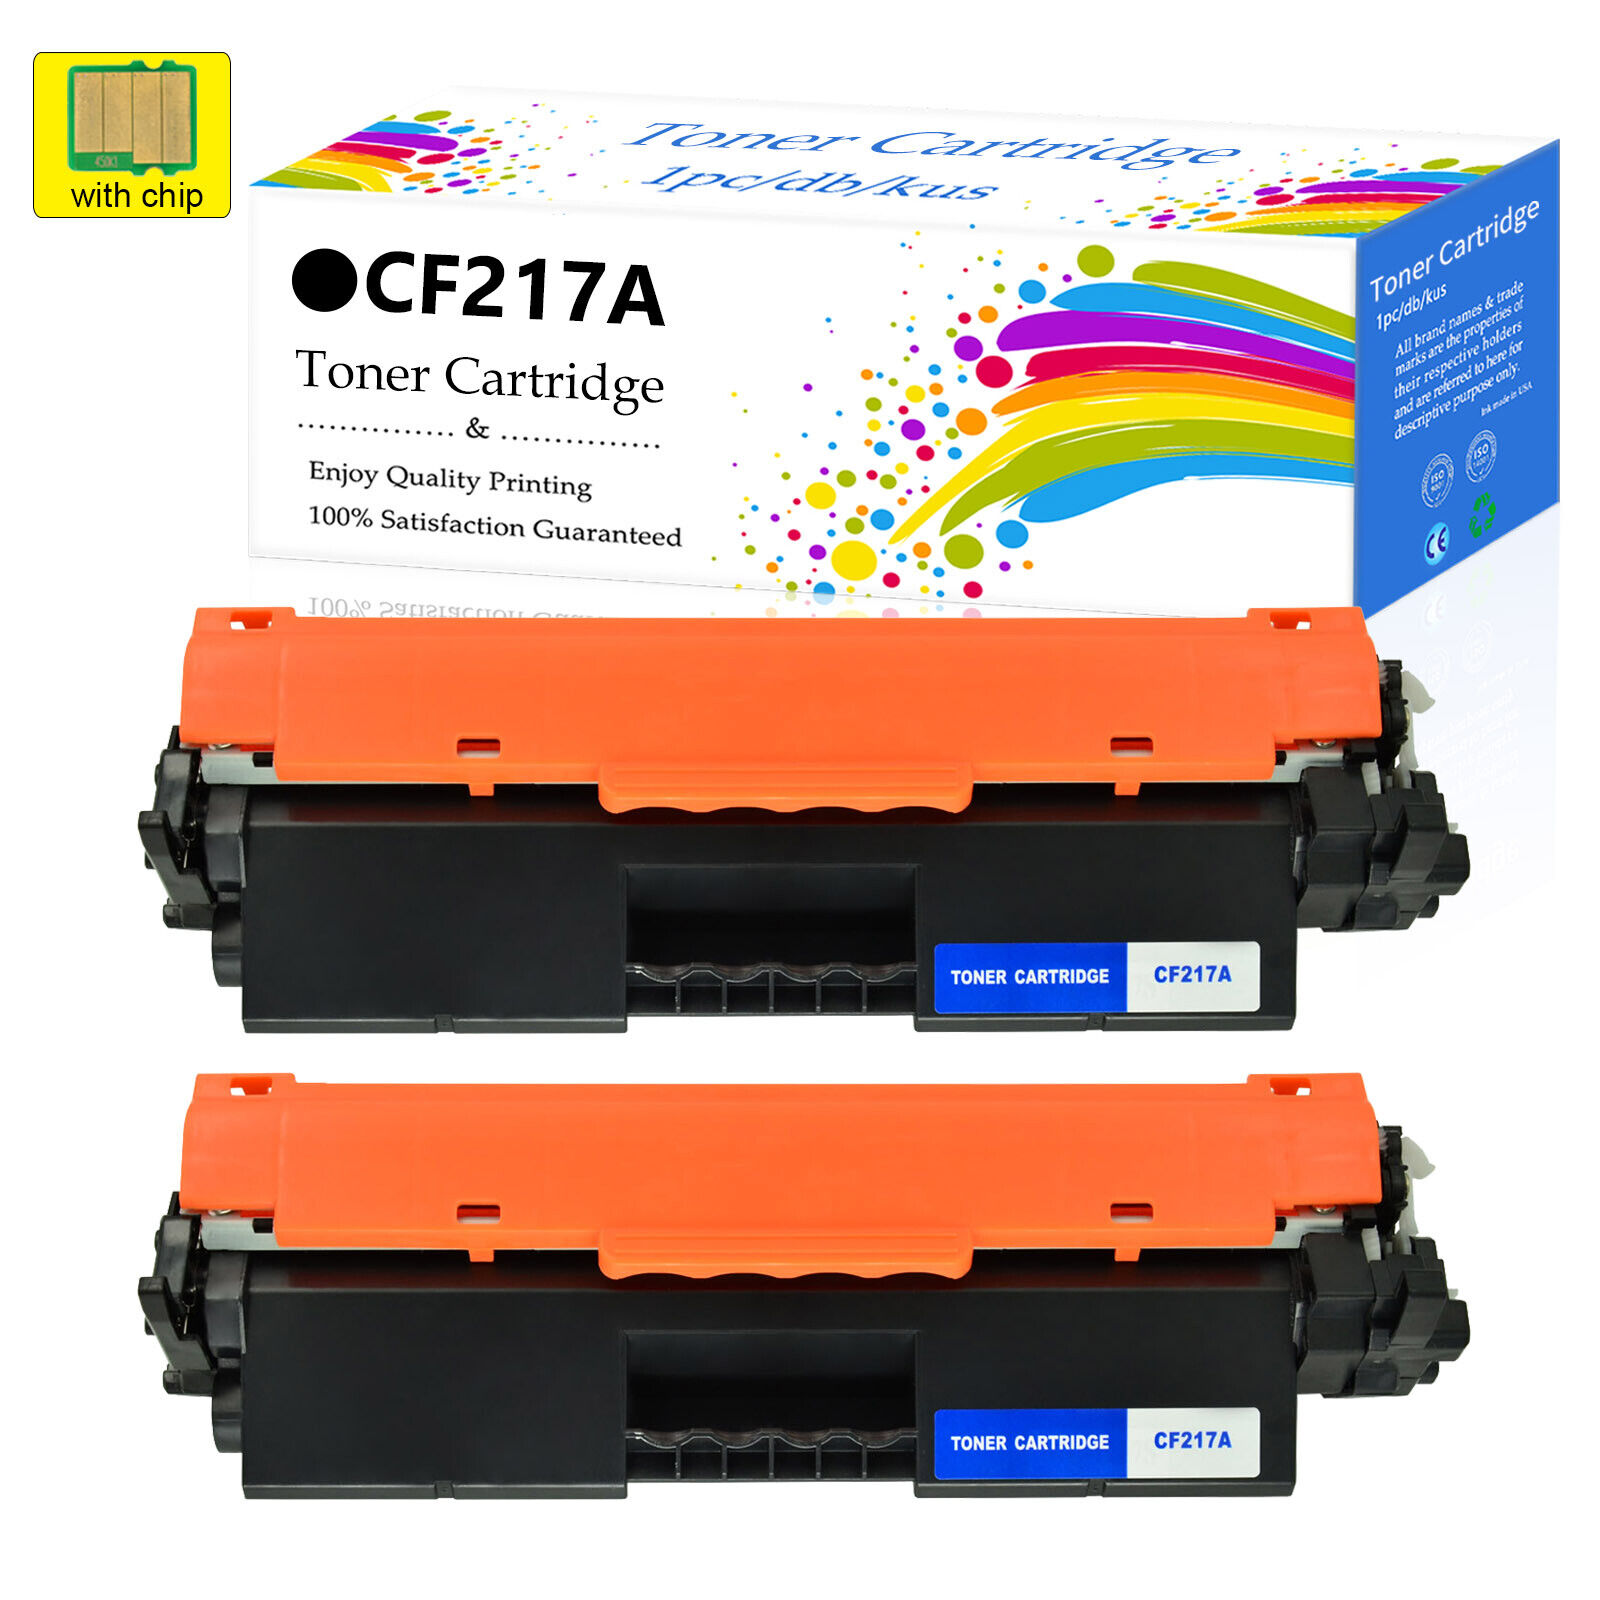 2 Pack CF217A 17A Toner Cartridge For HP 17A LaserJet Pro M102a M102w MFP M130fn